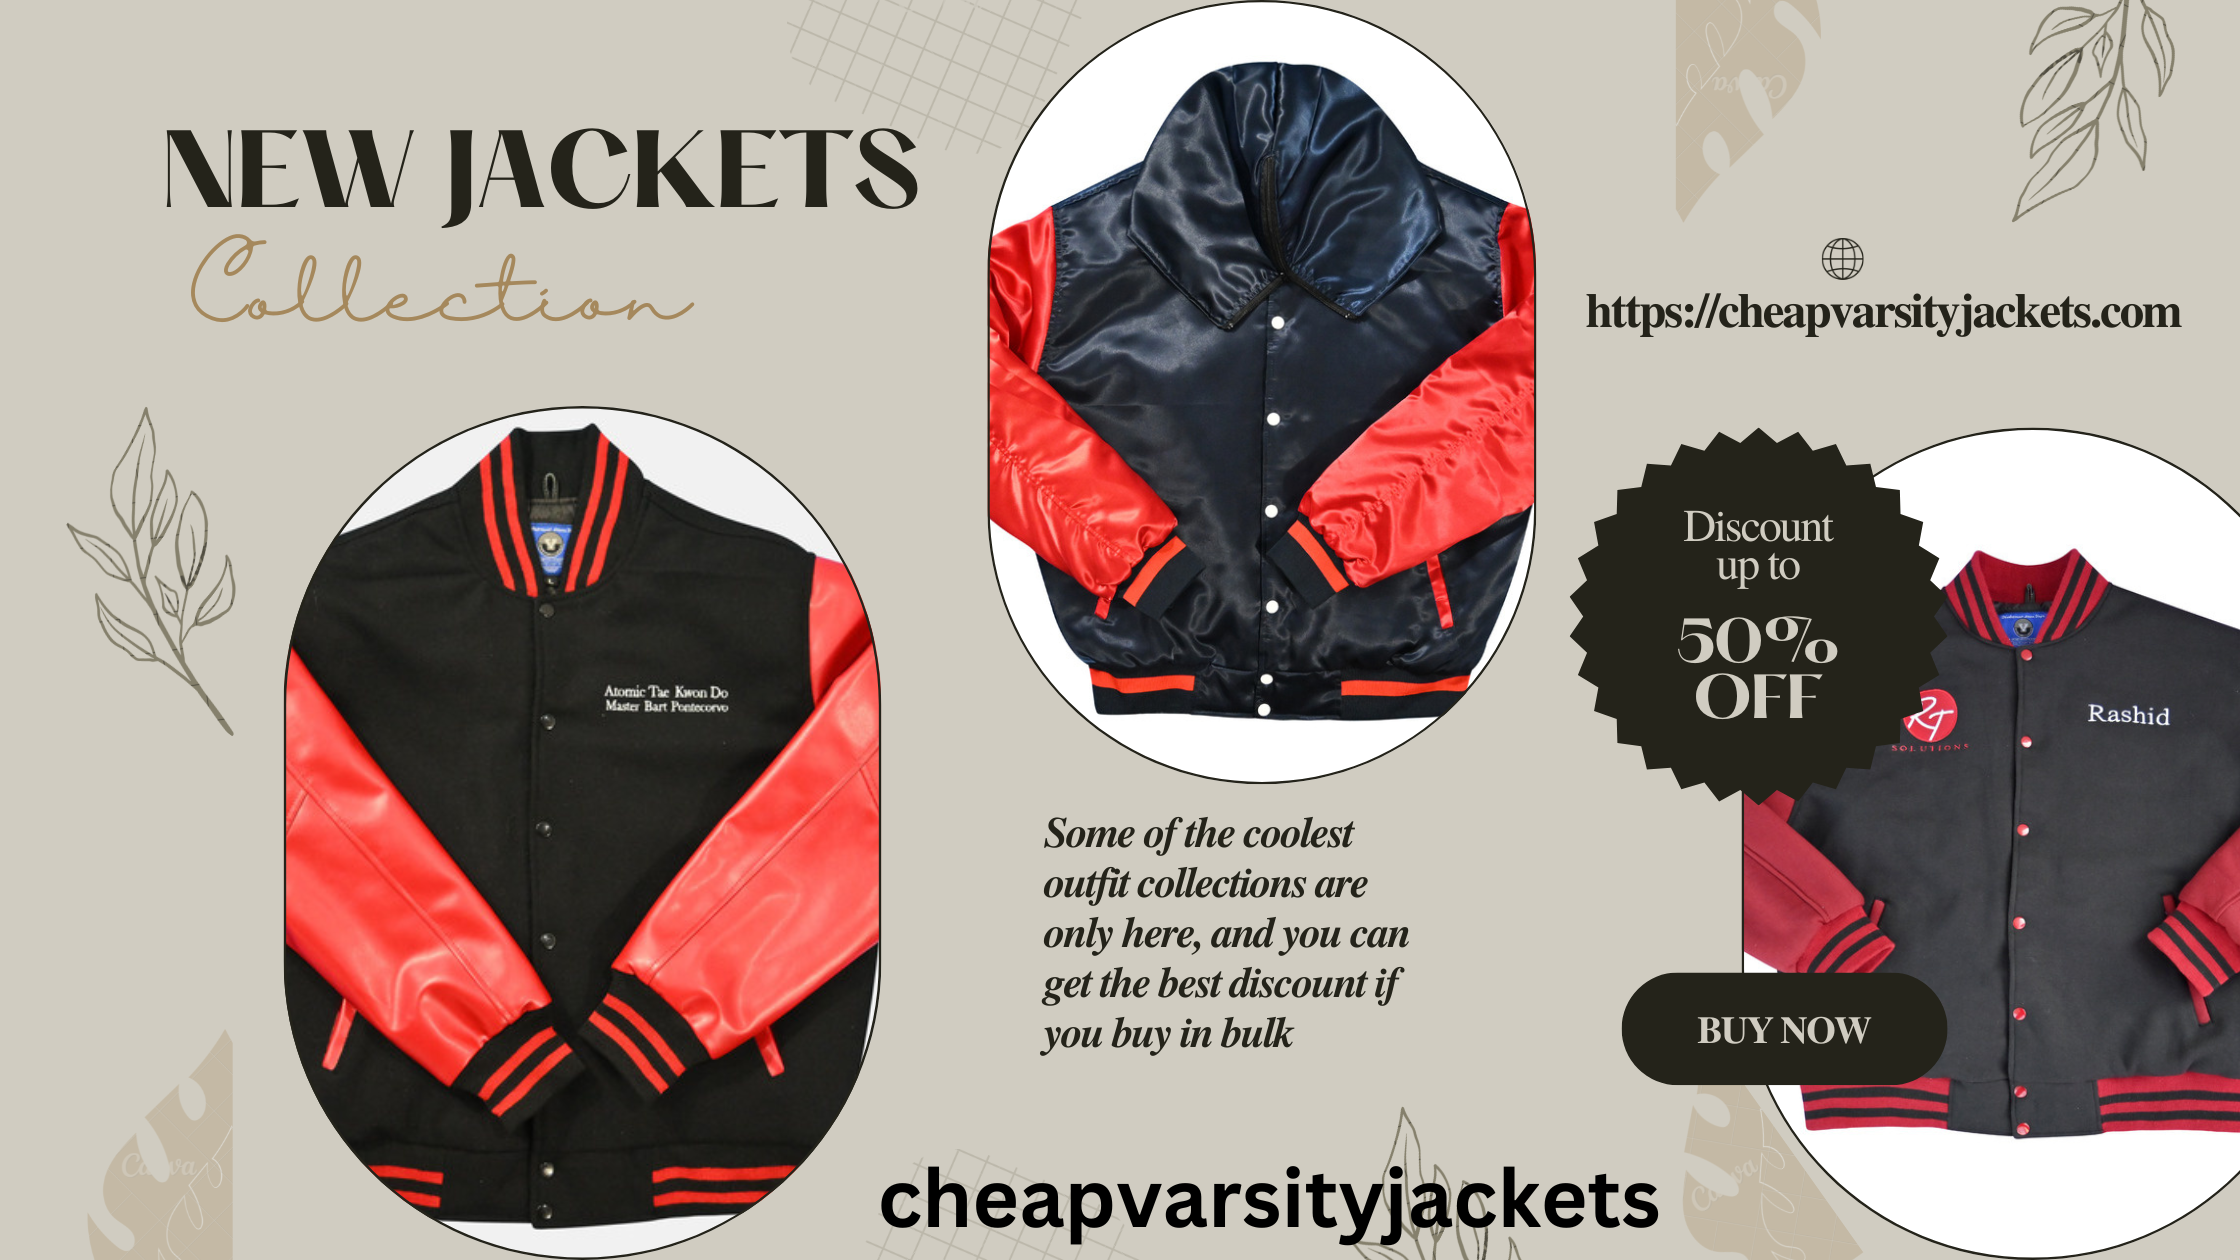 red and black varsity jacket